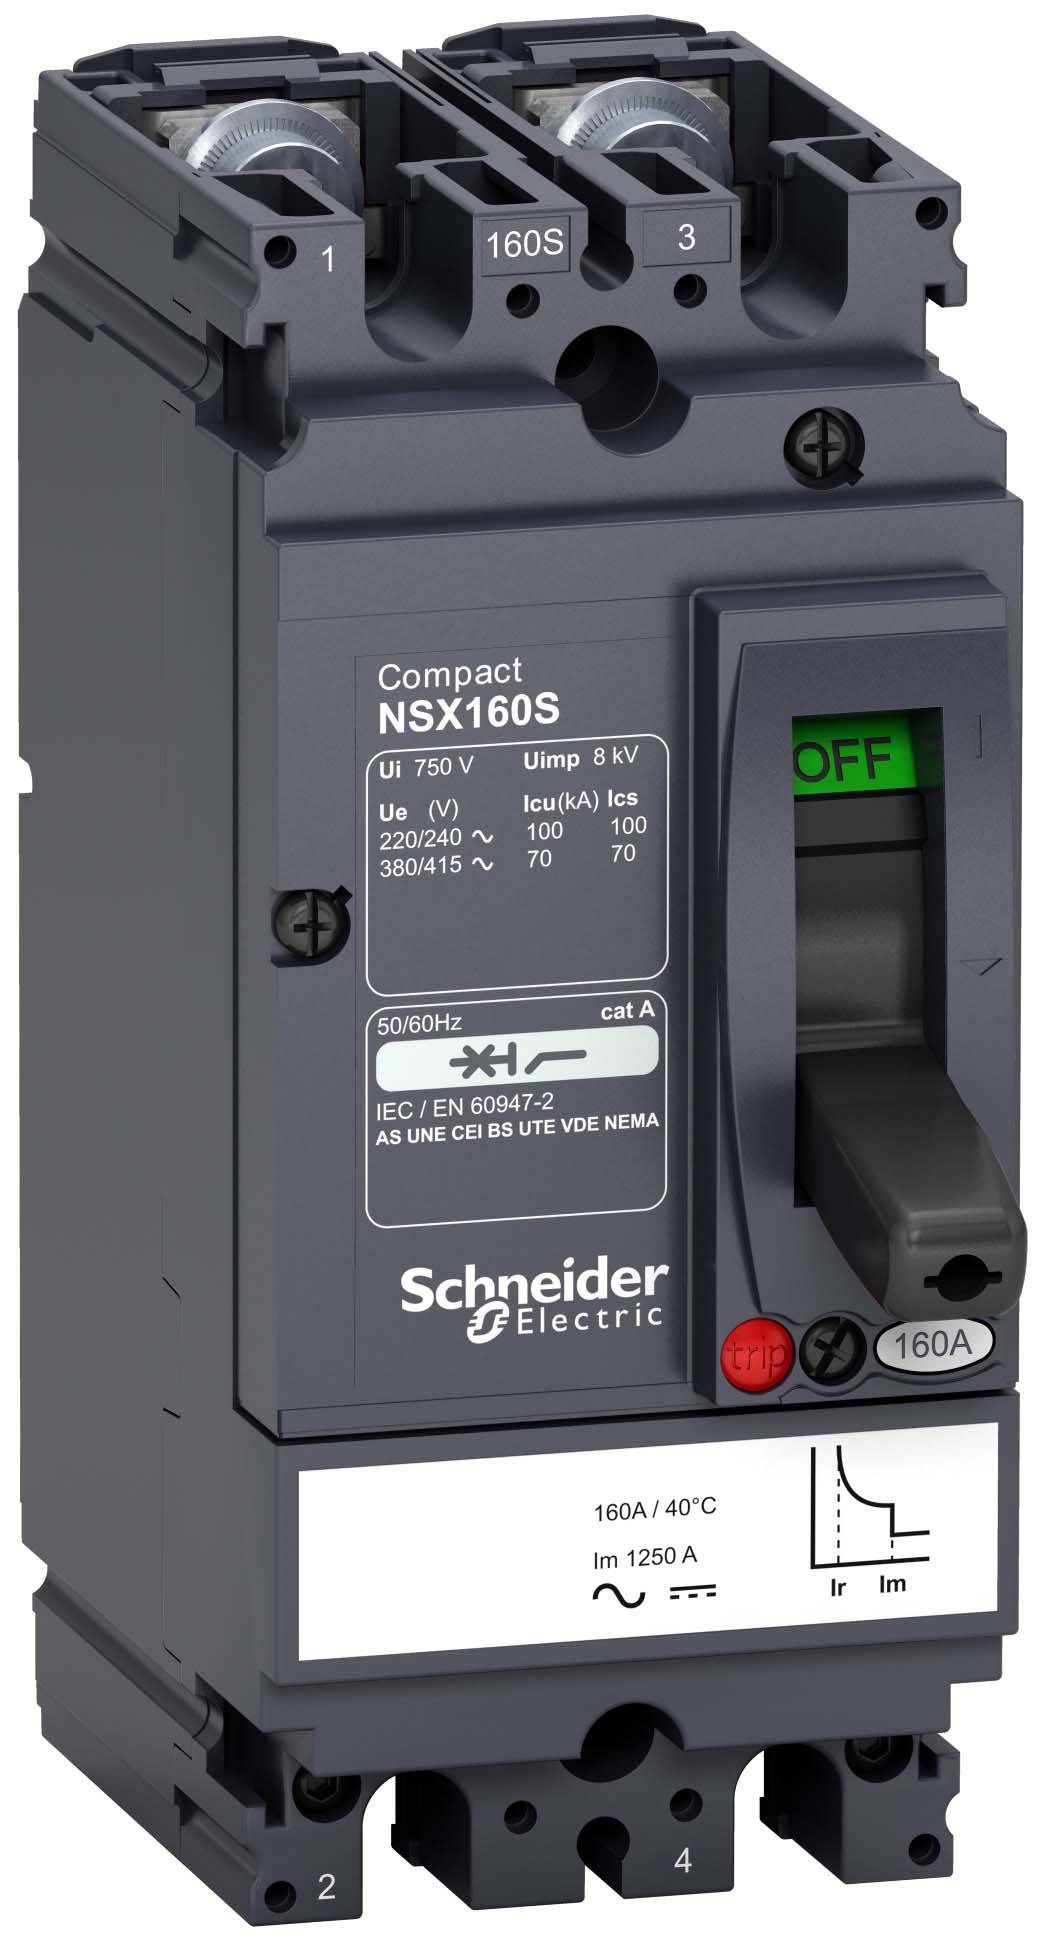 Автоматические выключатели compact. Автомат Schneider NSX-160f. Автоматический выключатель Шнейдер электрик nsx100f+tm16d 16a. Автоматические выключатели Compact nsx100. Schneider силовой автомат nsx160f.